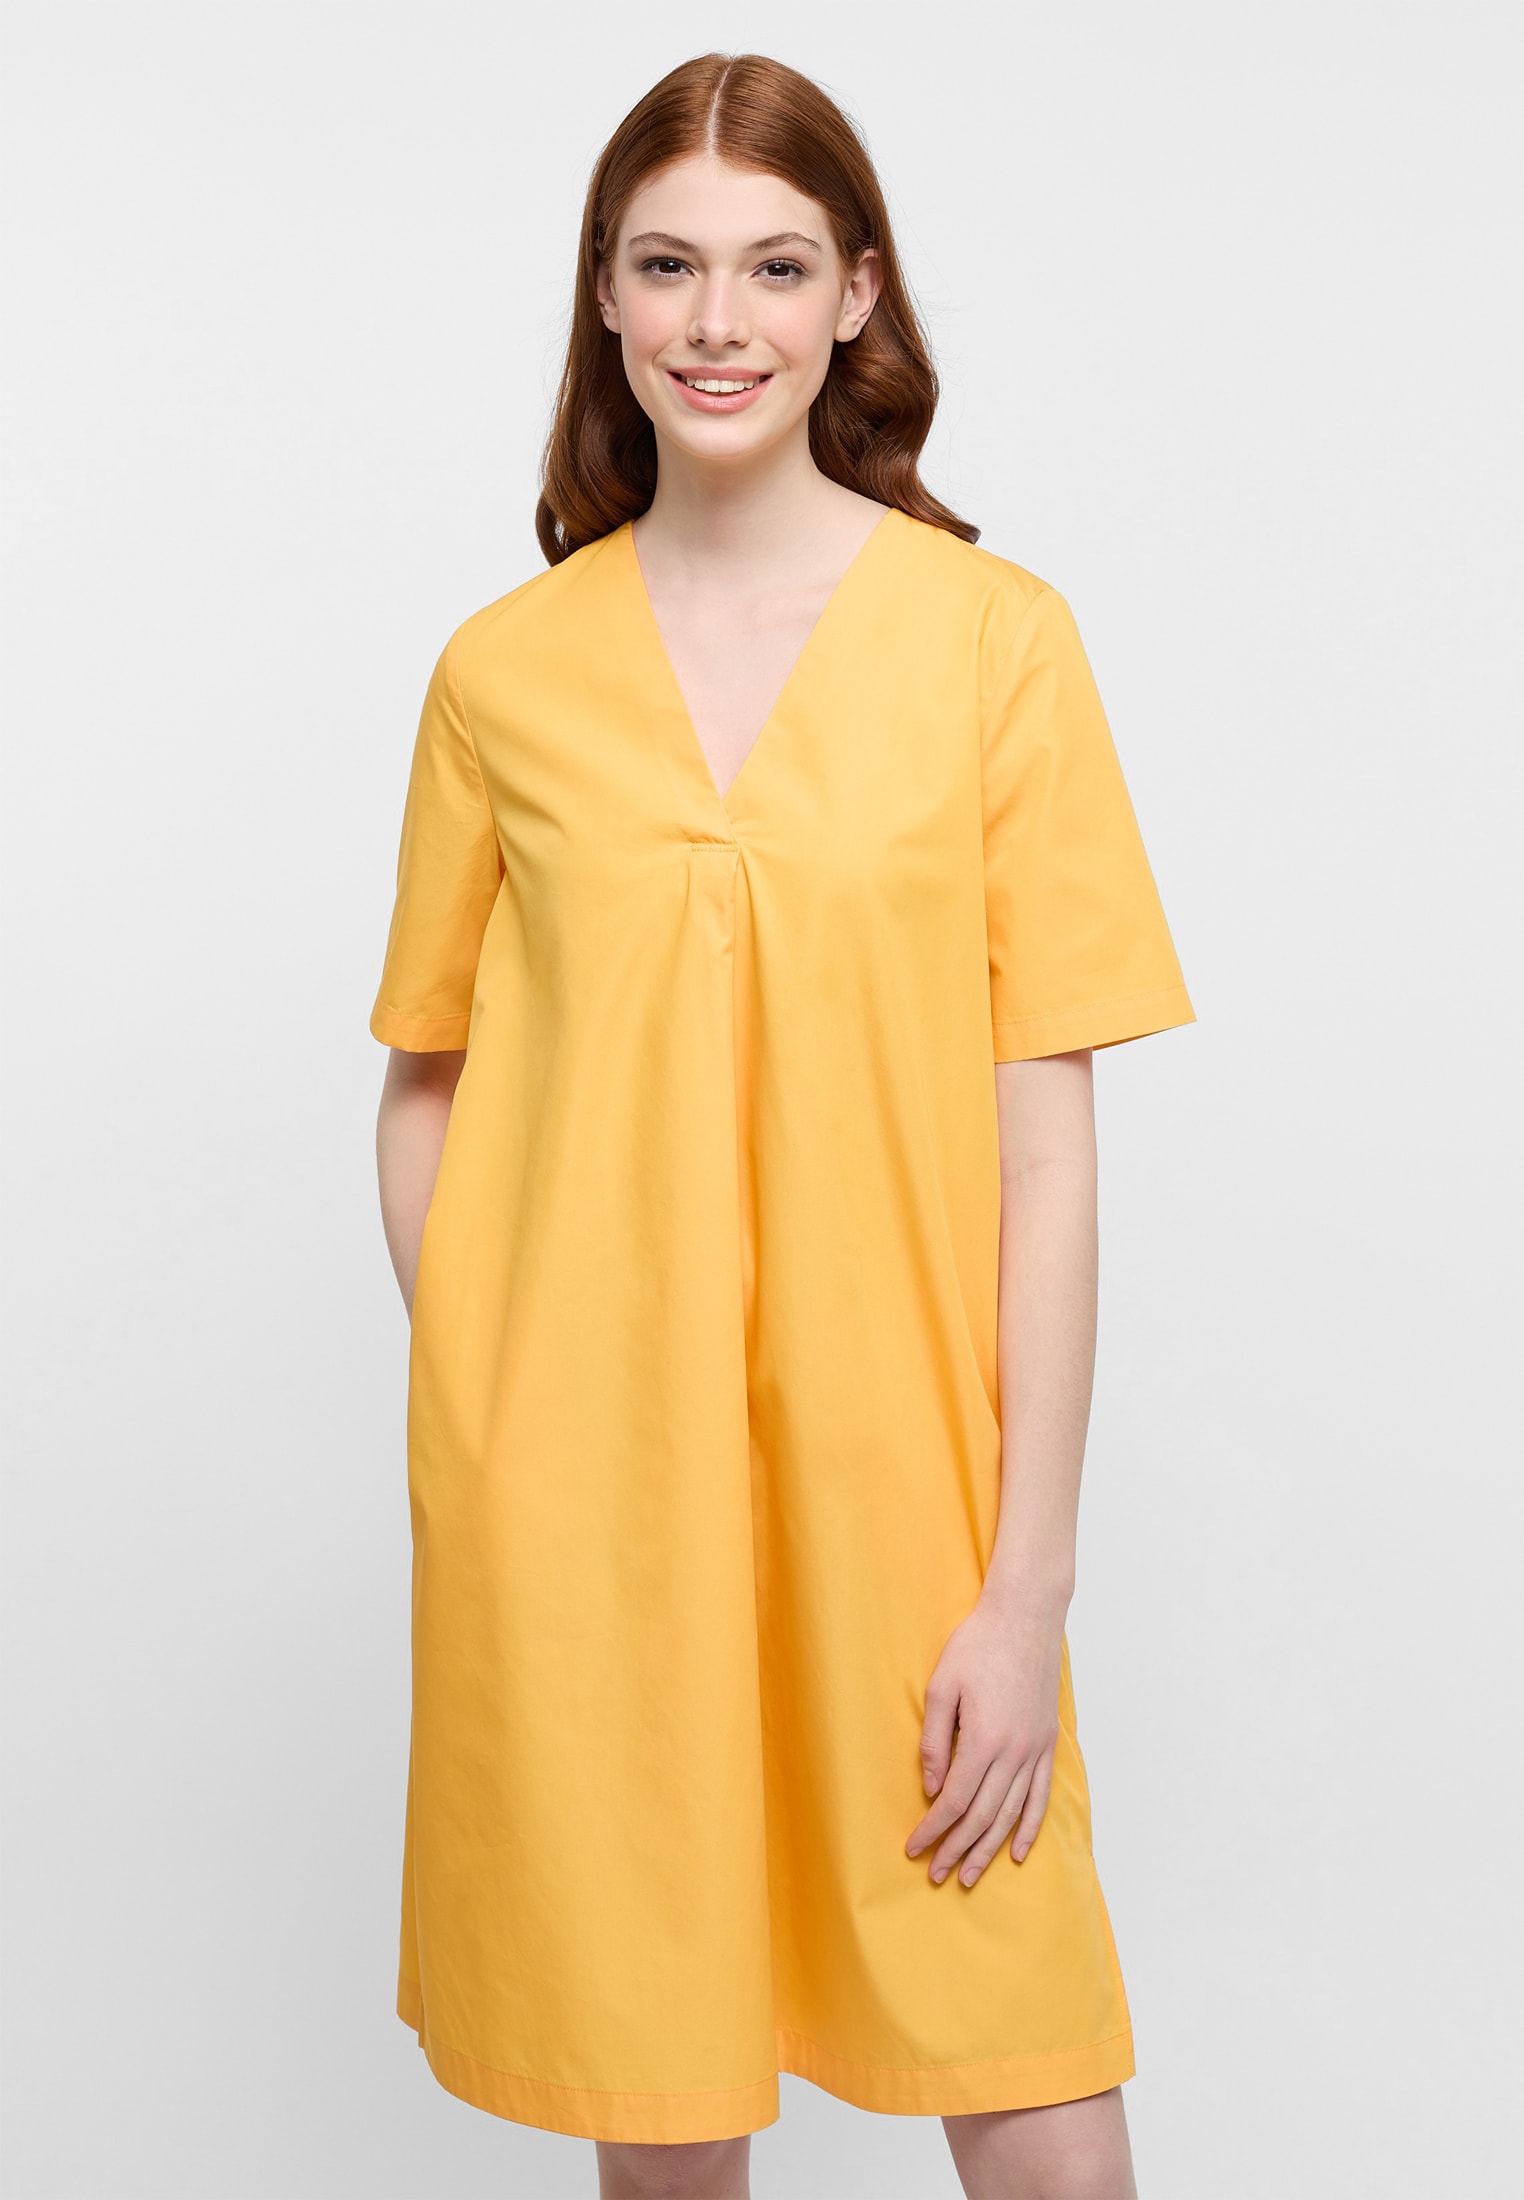 | 42 | short mandarin | | sleeve Shirt 2DR00211-08-21-42-1/2 in dress mandarin plain